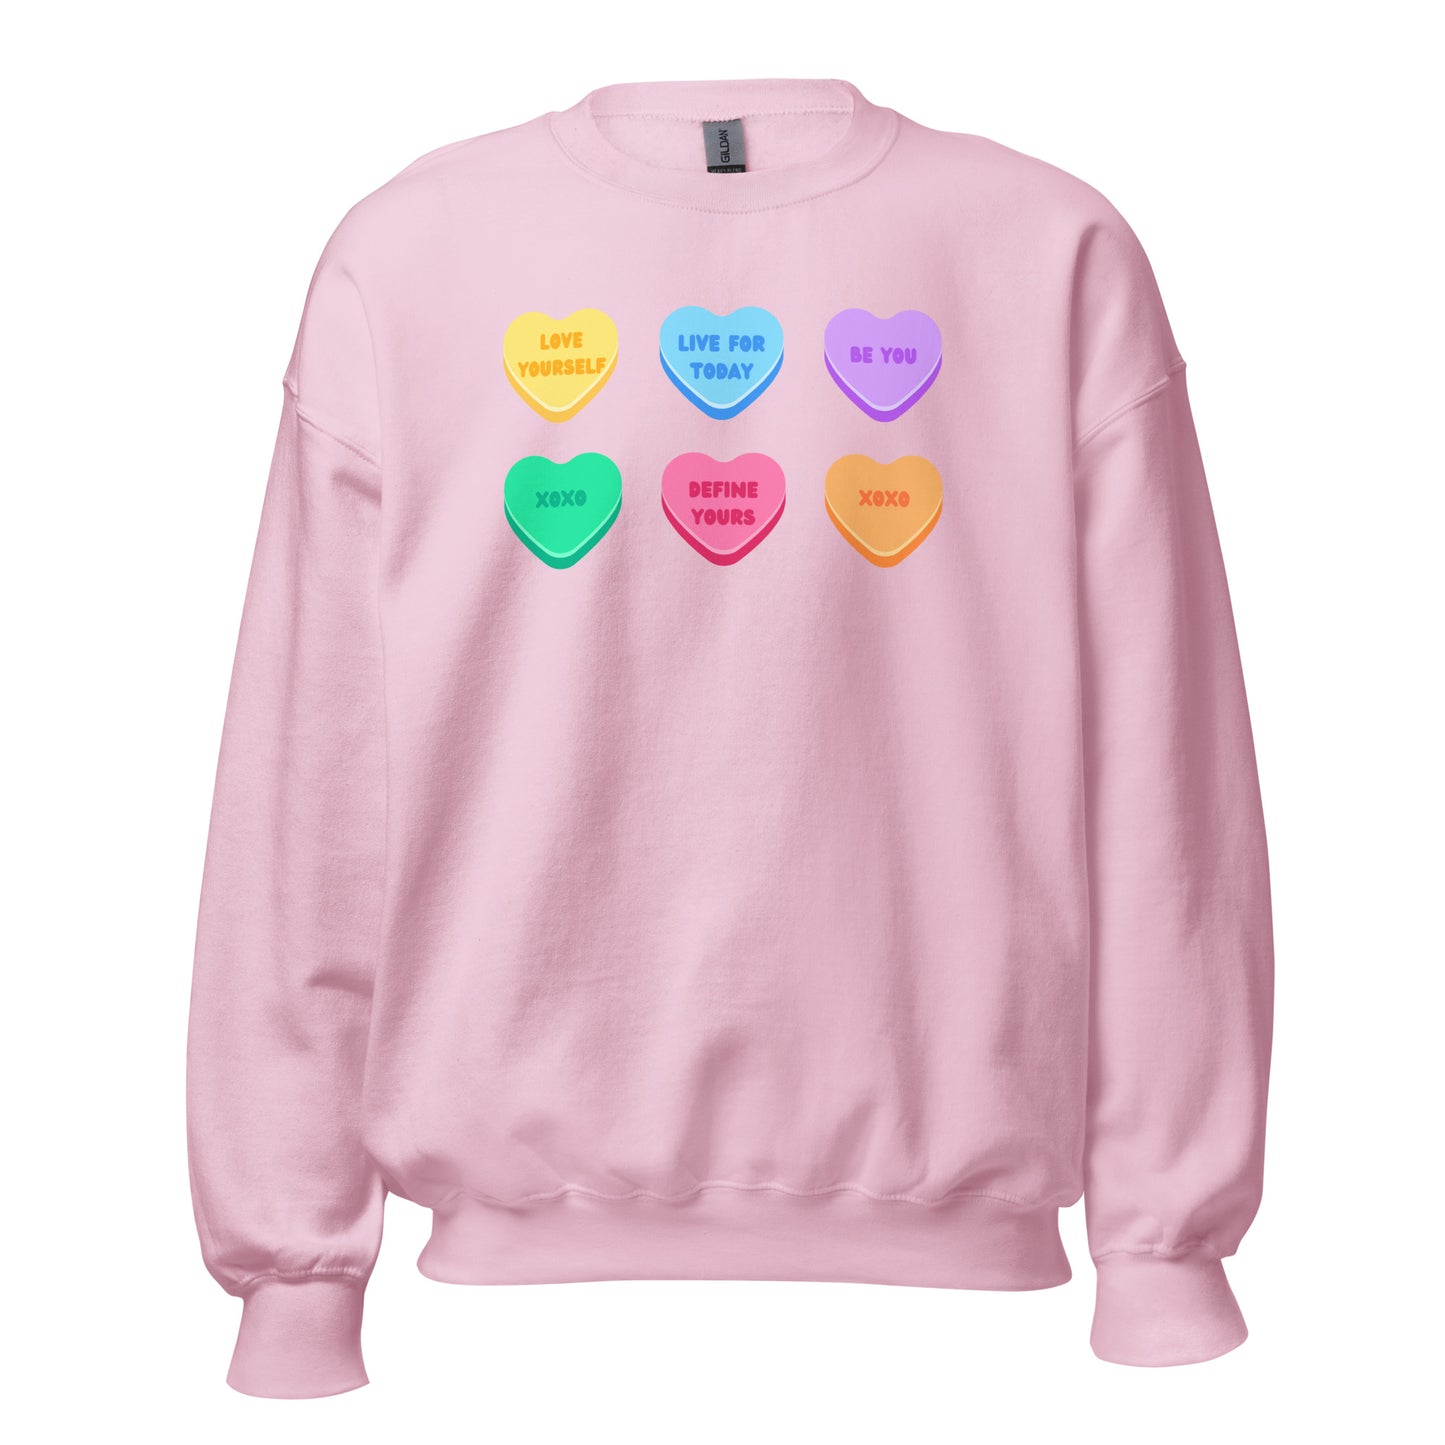 Conversation Hearts Define Yours Unisex Sweatshirt